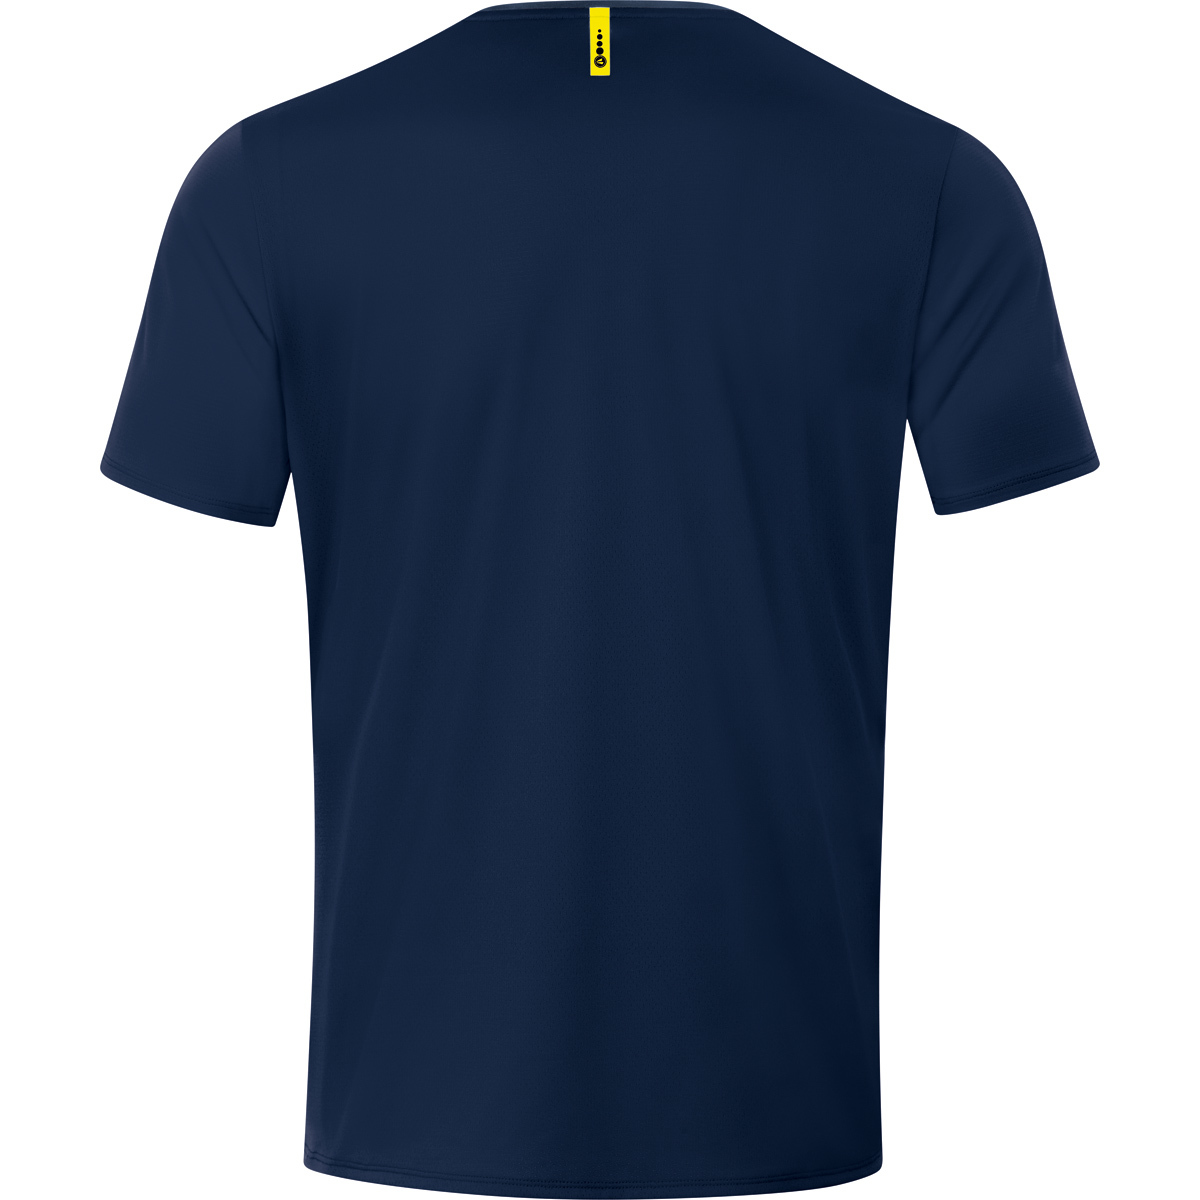 marine/darkblue/neongelb, Herren, 6120 S, T-Shirt 2.0 JAKO Champ Gr.